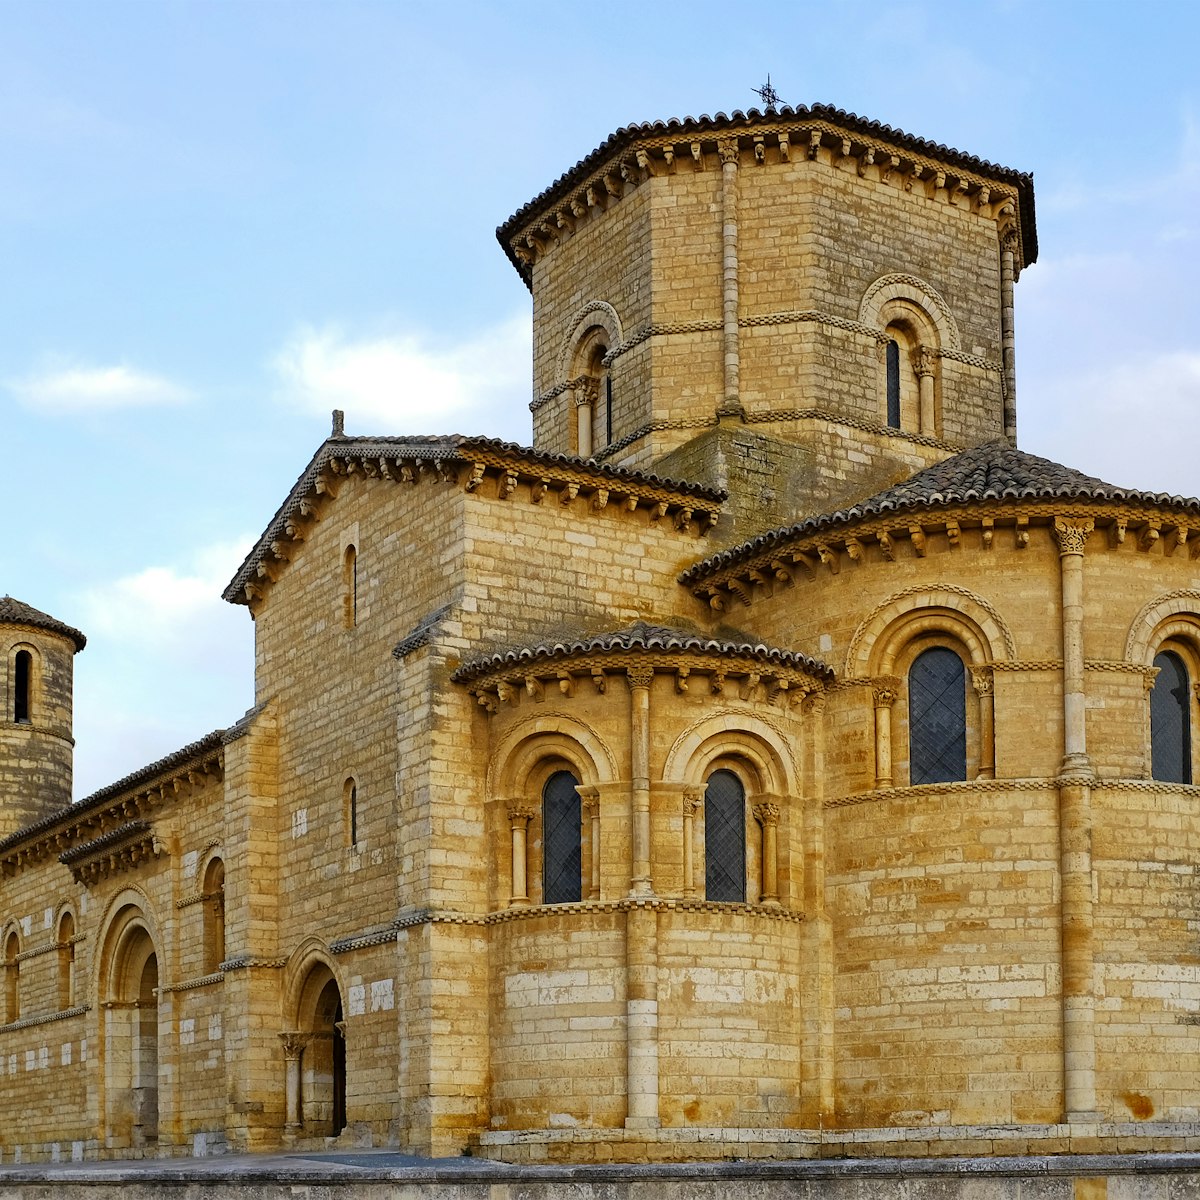 The church of San Martin de Tours in Fromista, Castile and León, Spain.